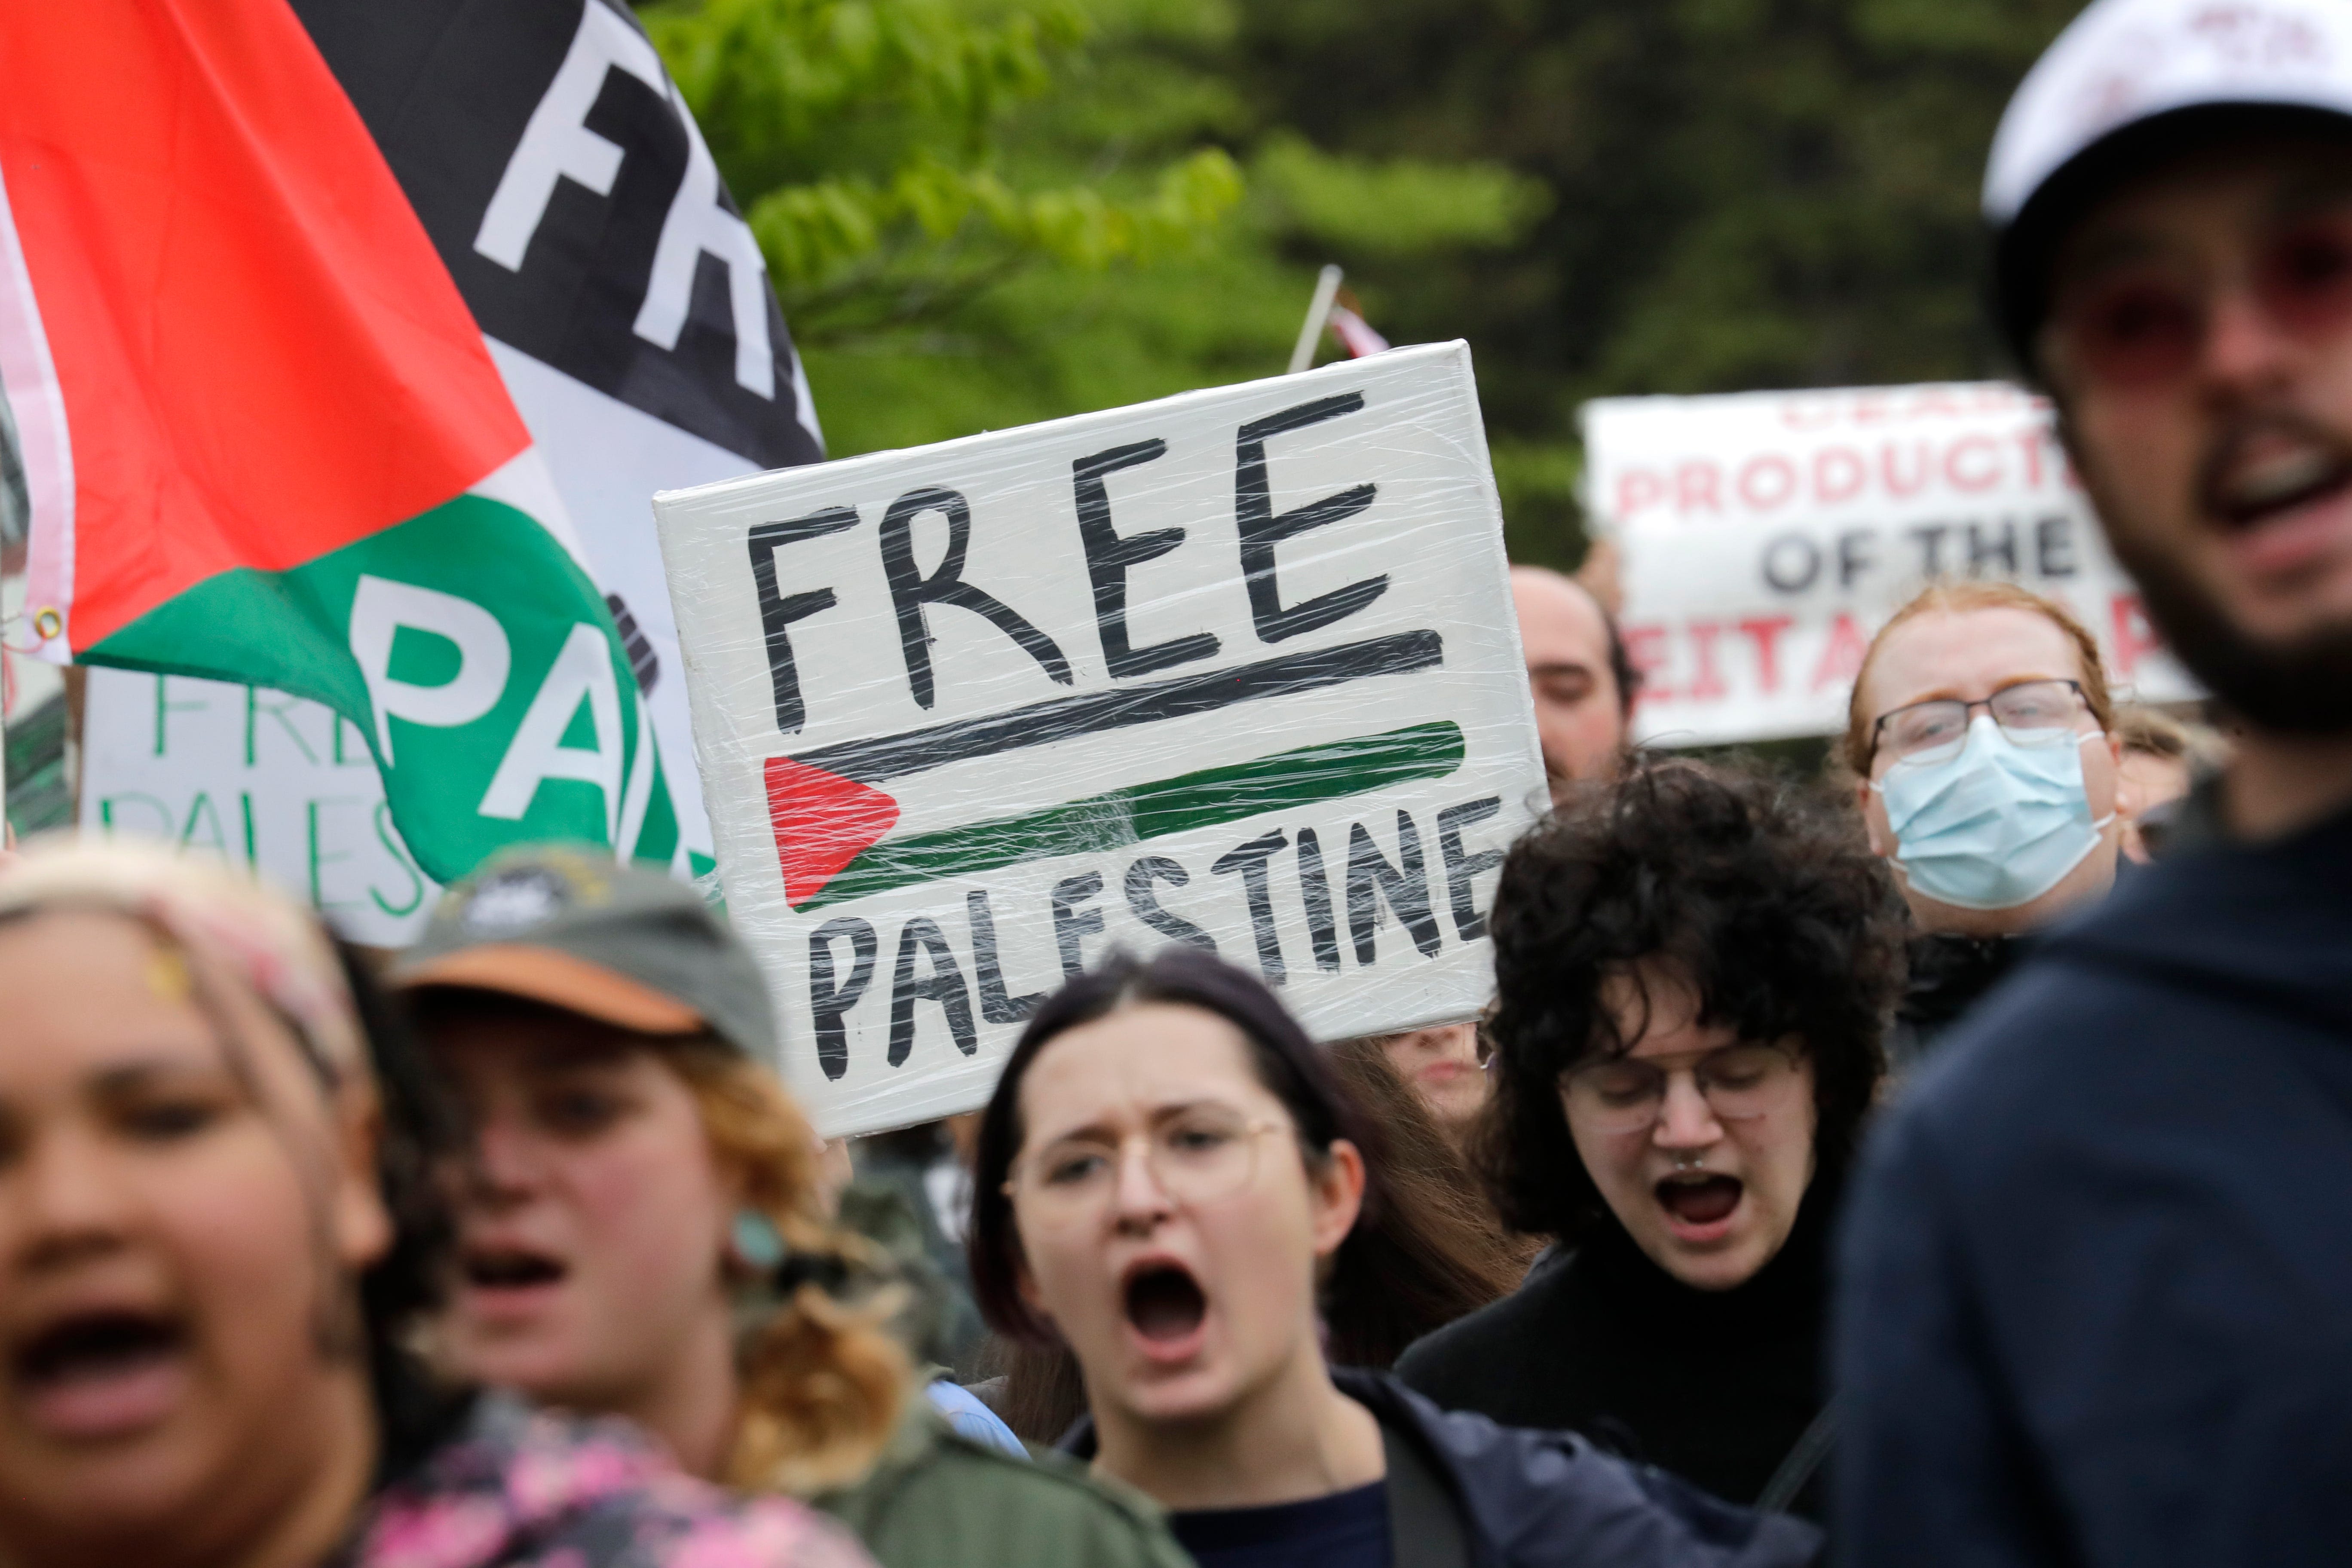 Students stage pro-Palestine protest at UW Oshkosh, demand university cut ties with Oshkosh Corporation